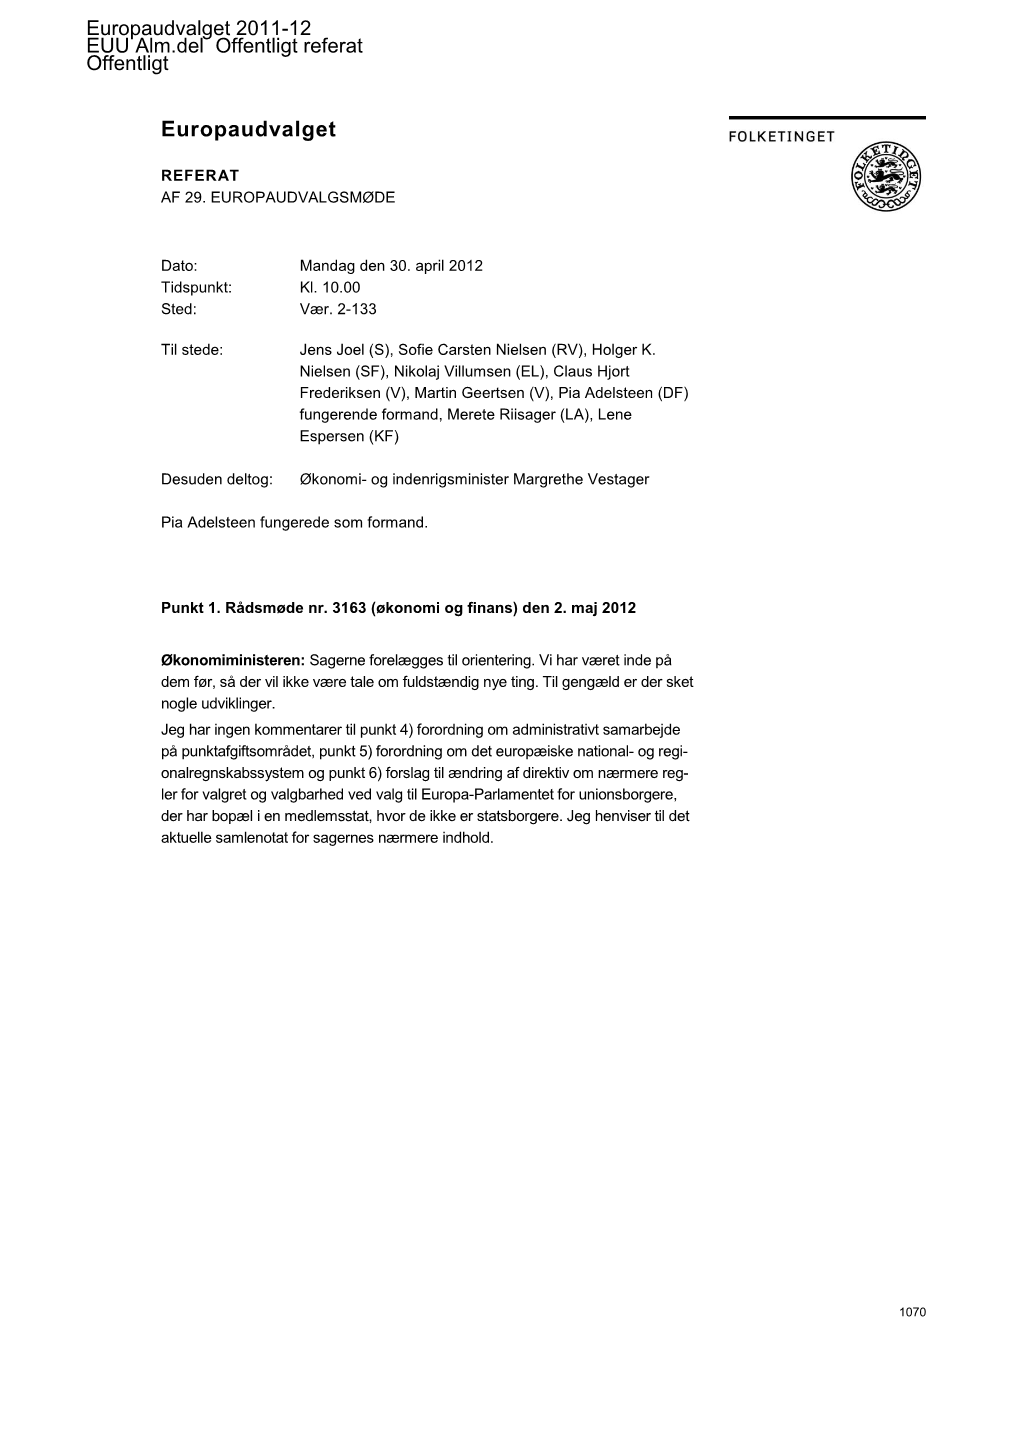 EUU Alm.Del Offentligt Referat : EUU Udvalgsmødereferat M 29, 30-4-12